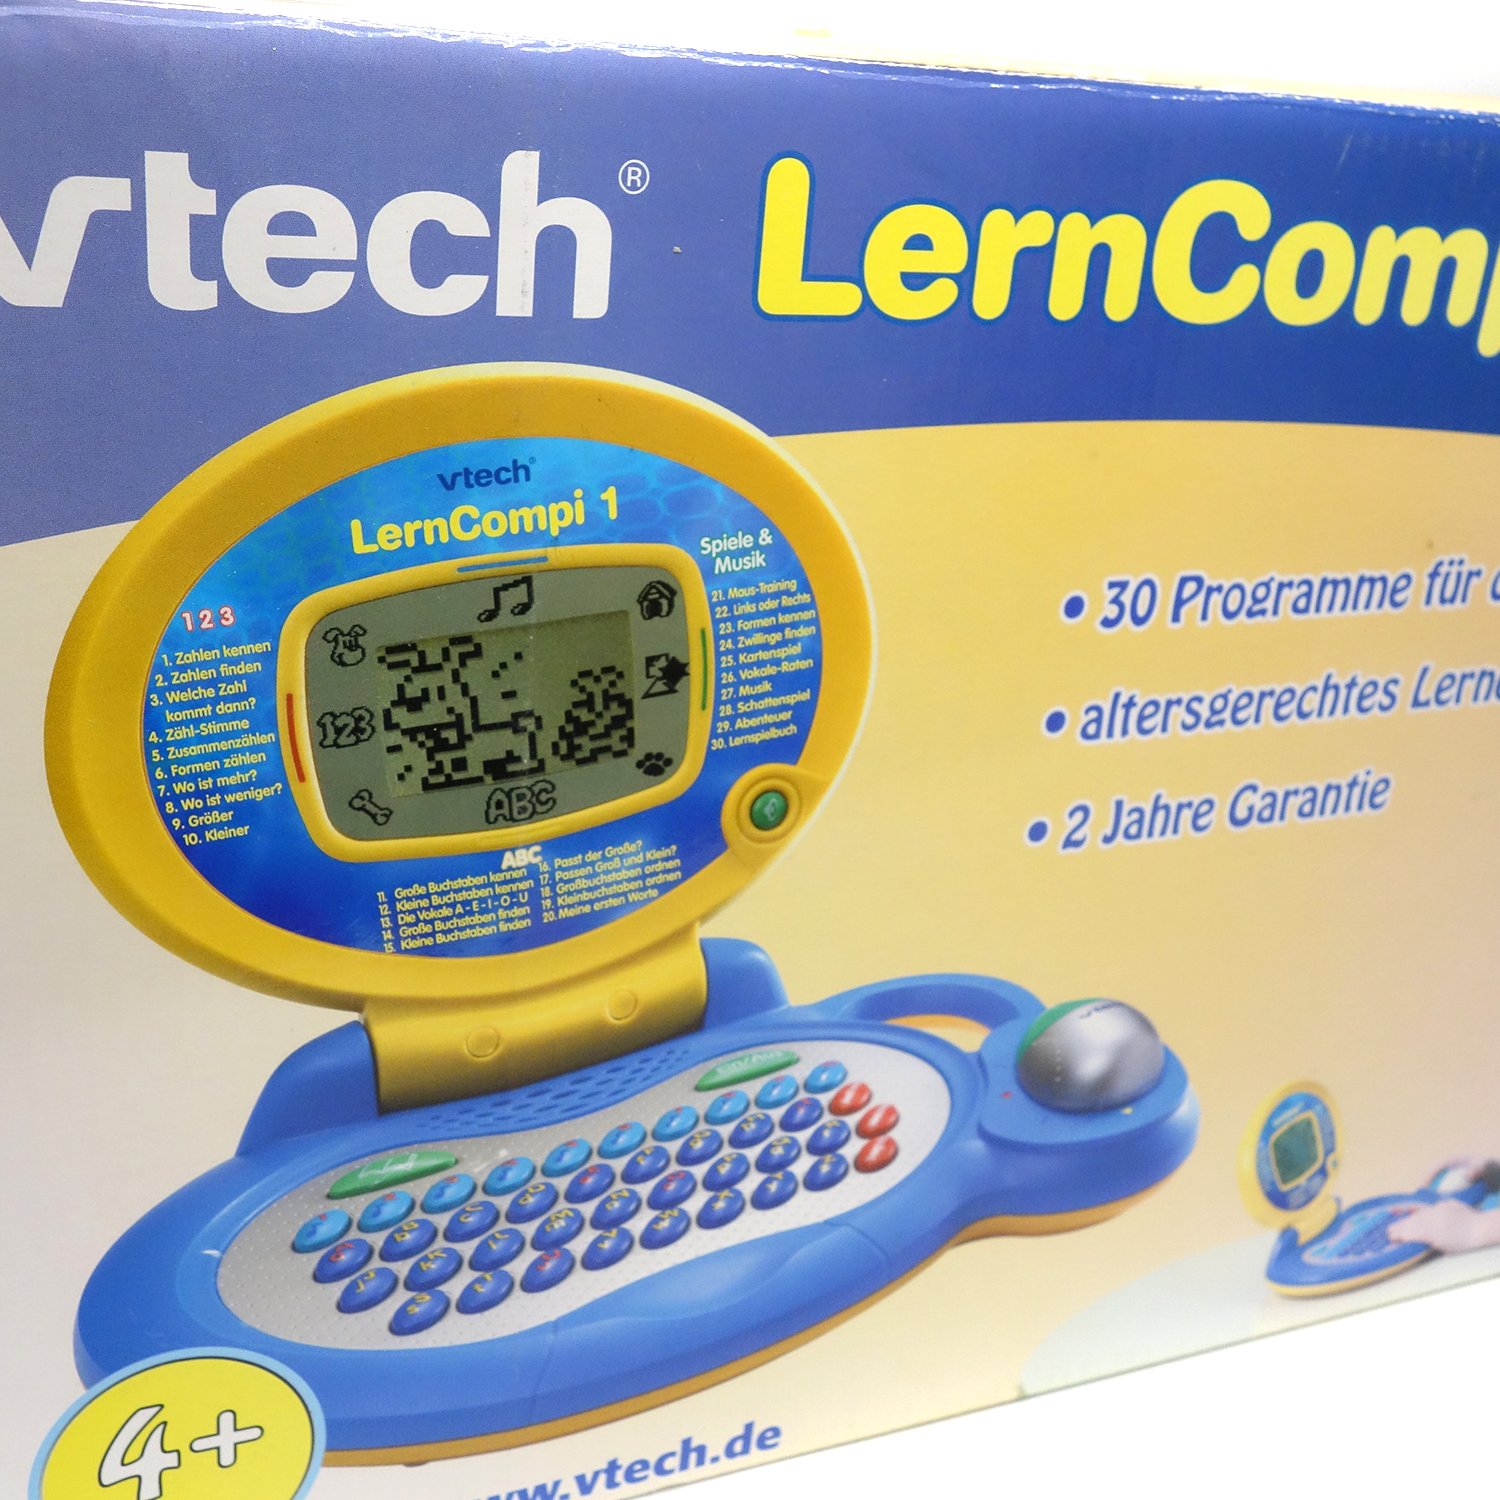 Vtech LernComp